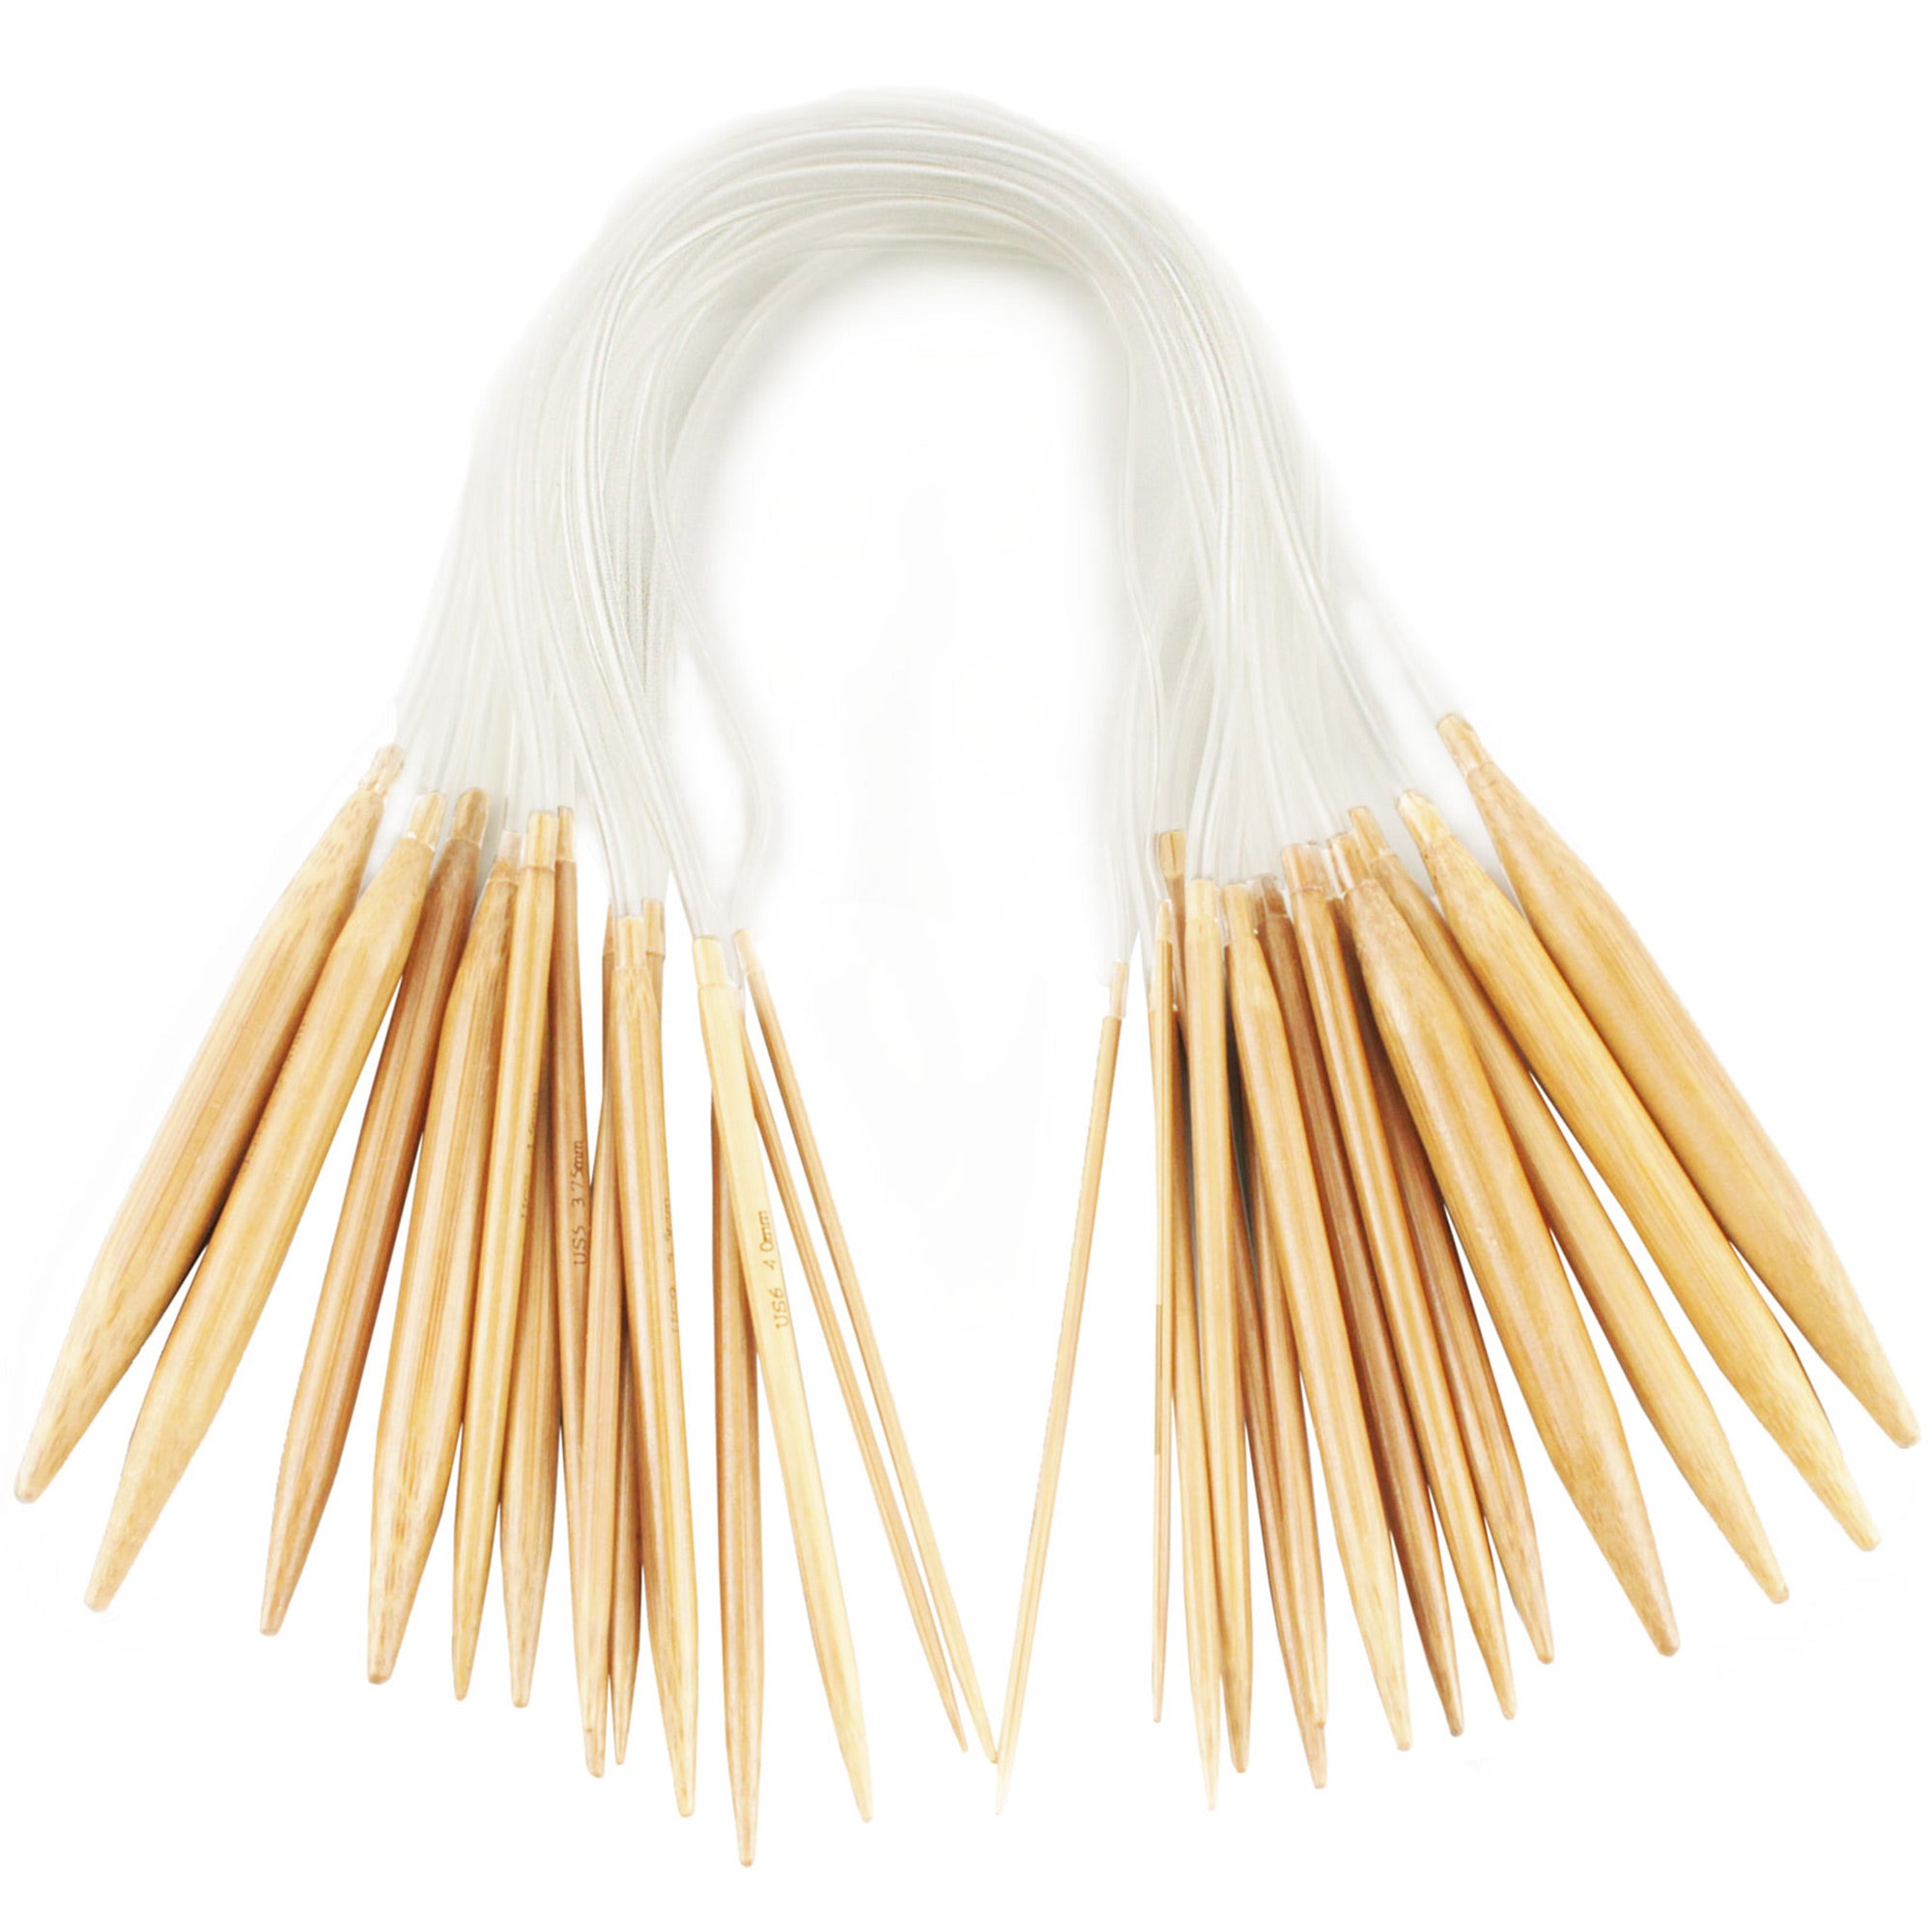 JubileeYarn Circular Bamboo Knitting Needles Set | 4 Lengths (16 24 30  40) | Carbonized Brown | US Size 13 Needles